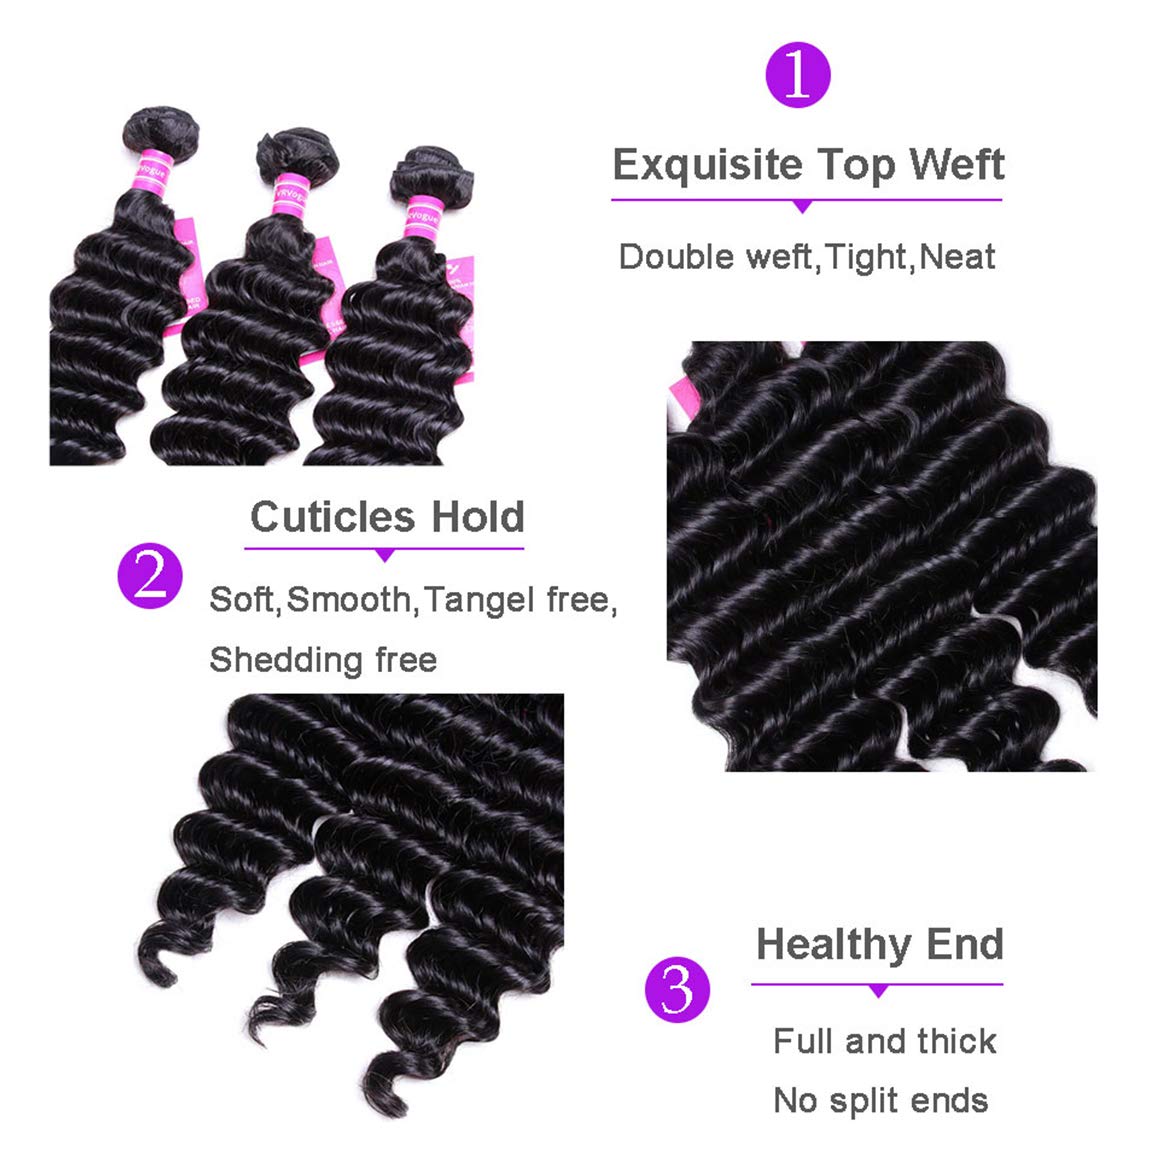 VRVOGUE (18" 20" 22 ) Deep Wave Brazilian Human Hair Bundles with Lace Closure 16 Inch Free Part 4x4 (Natural Black-330g/Lot-130% Density) 100% Unprocessed Virgin Brazilain Human Weave Hiar Extensions